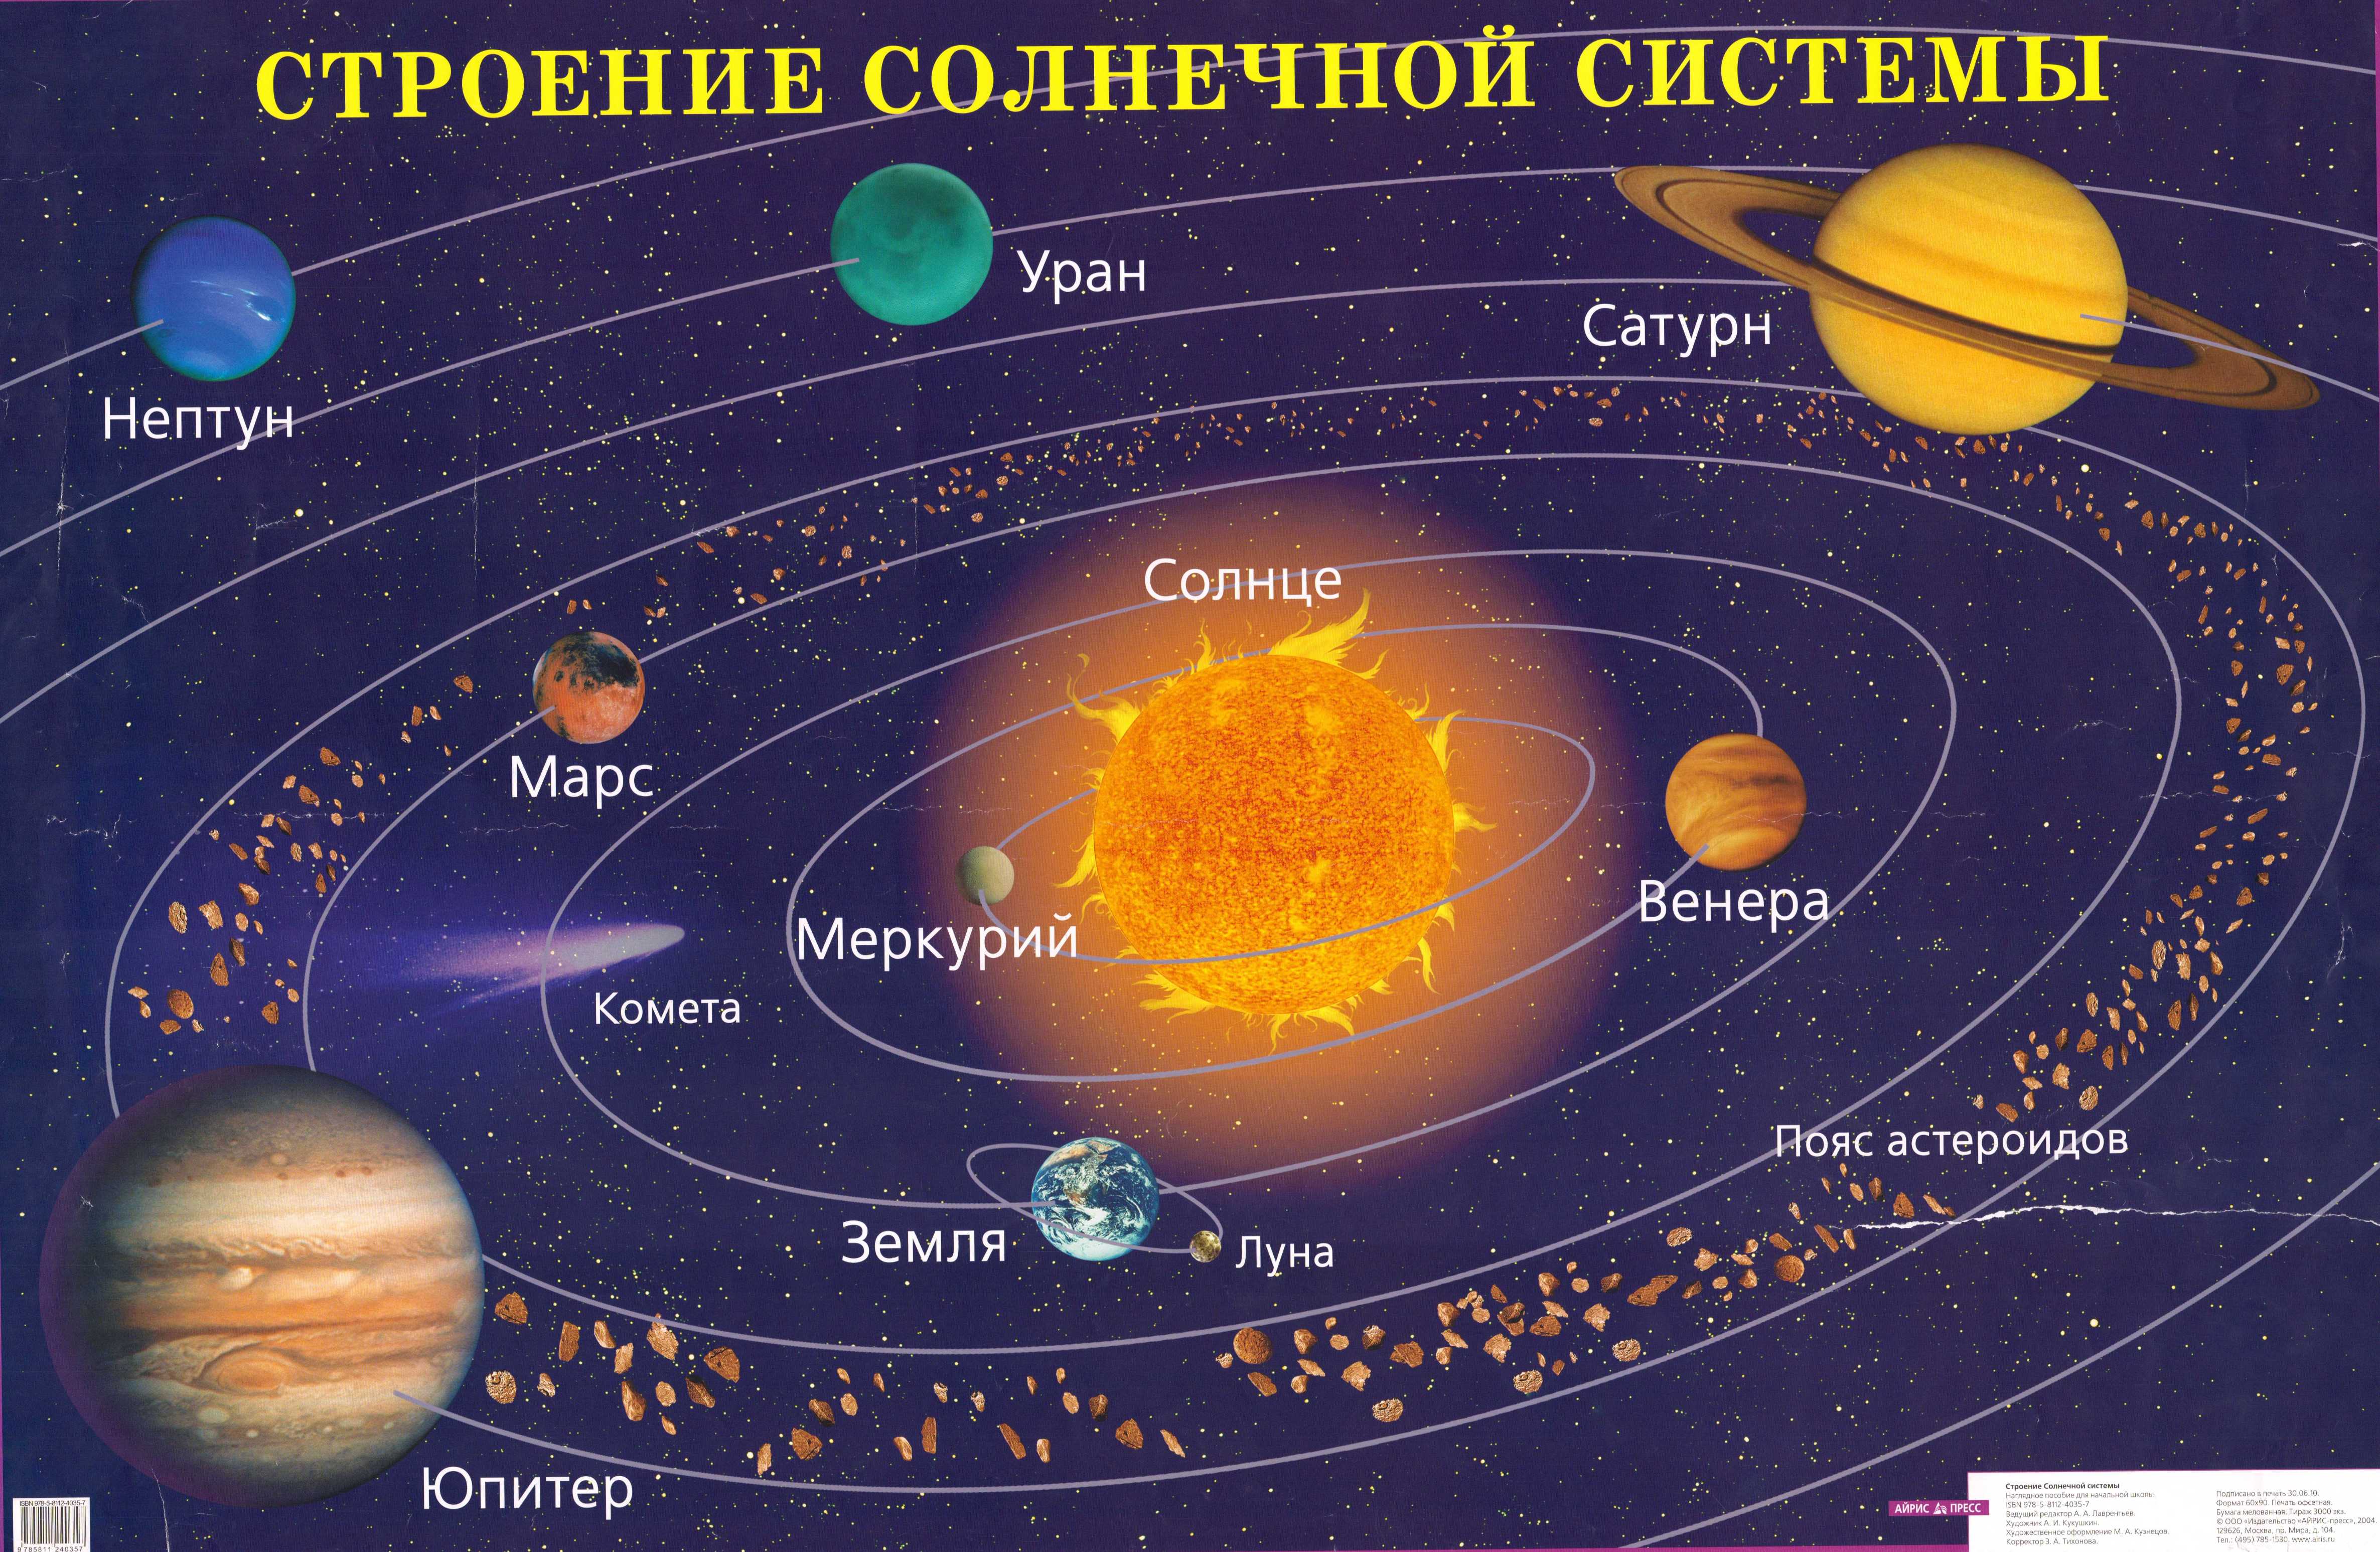 Где расположена планета. Солнечная система с названиями планет. Расположение планет солнечной системы. Строение и структура солнечной системы. Строение планет солнечной системы.